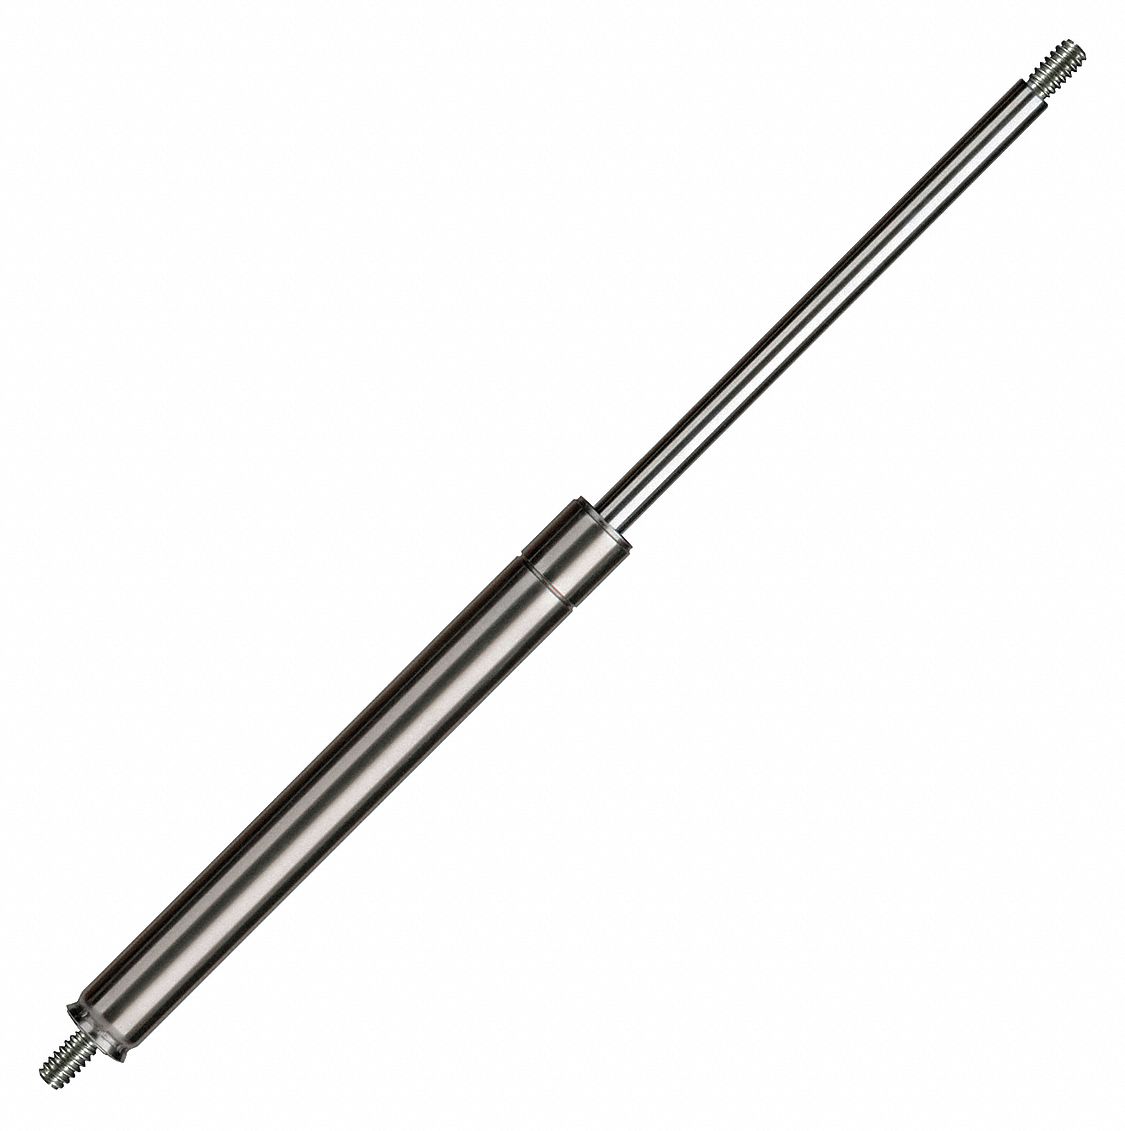 Standard Strut: Std, 5 to 15 lb, Stainless Steel, M6x1.0 Rod Thread Size